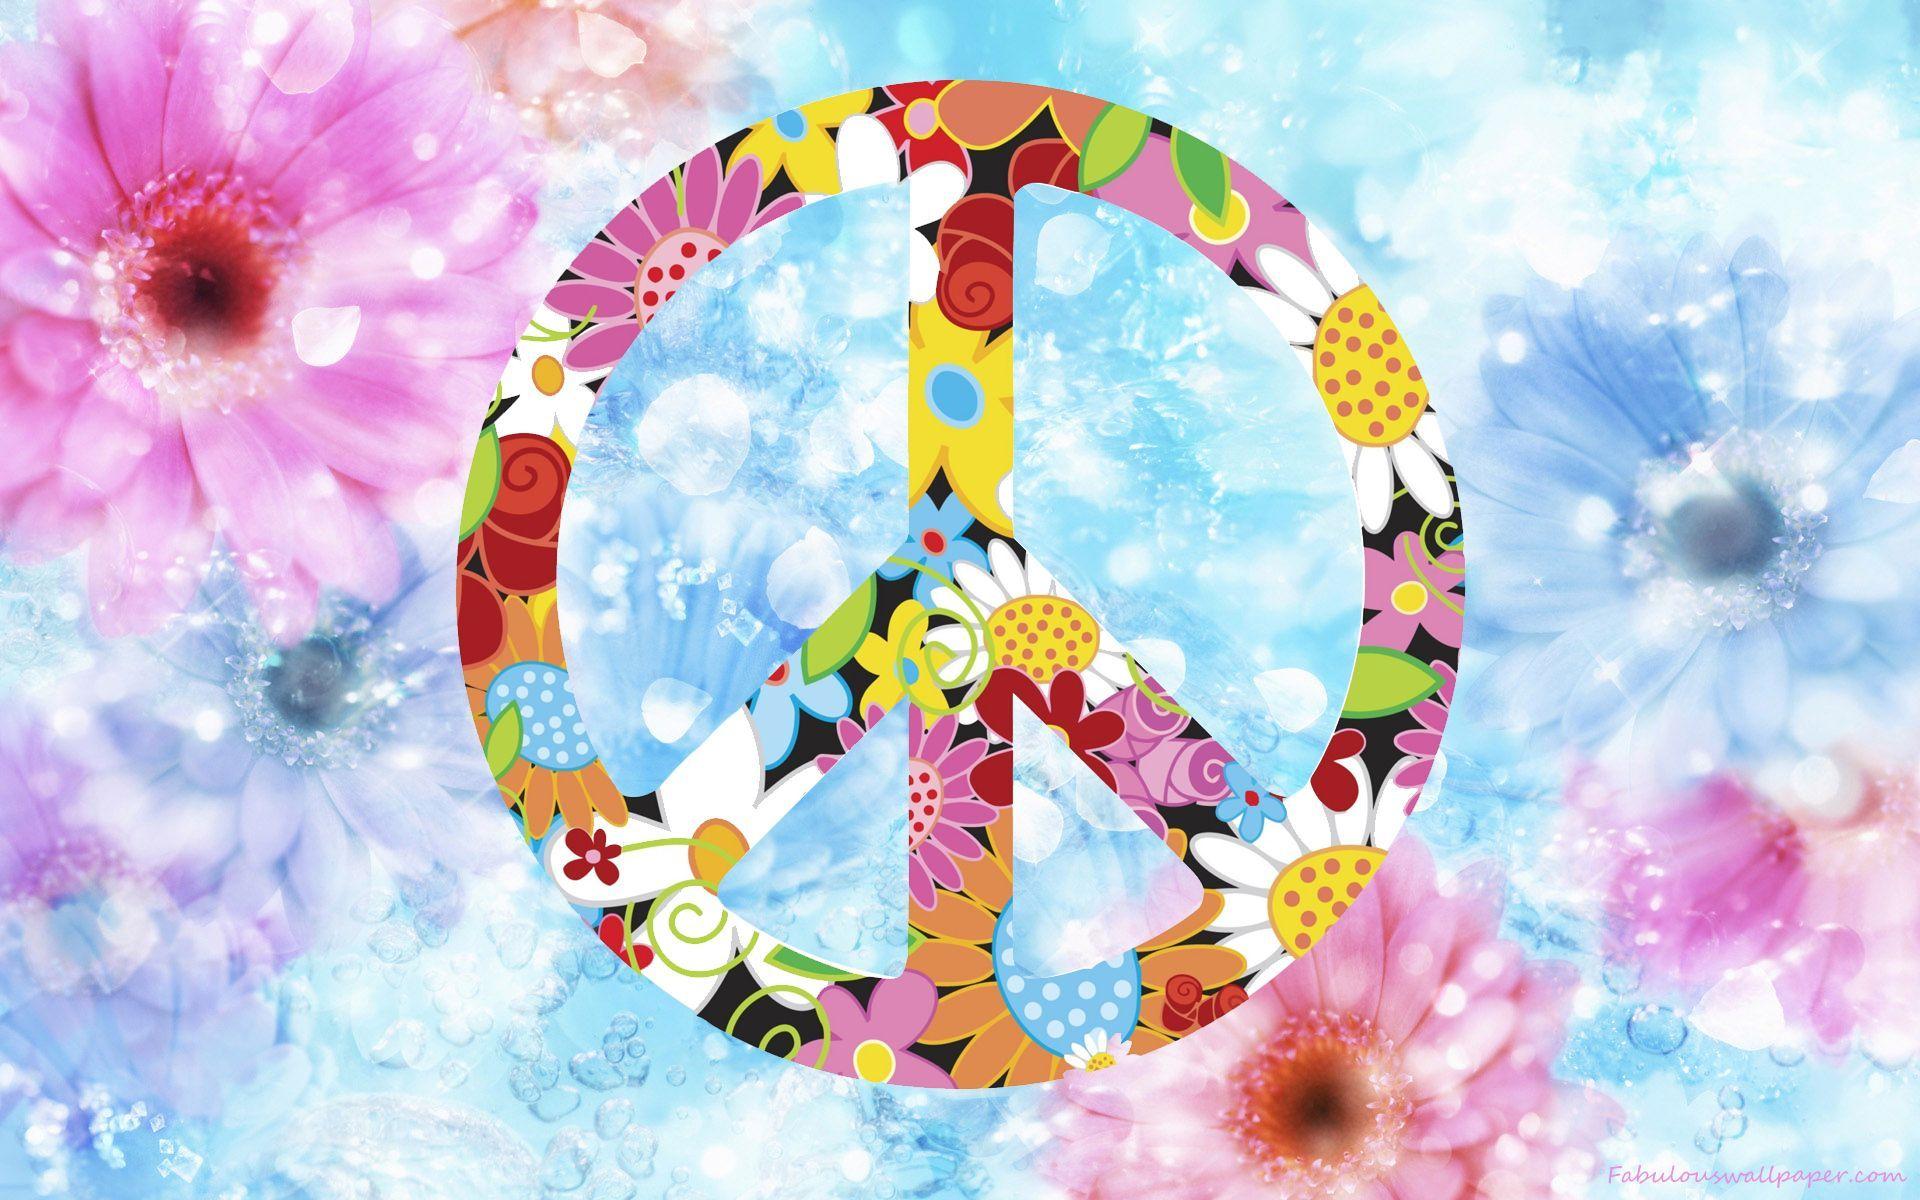 Peace. Free International Peace Day, computer desktop wallpaper